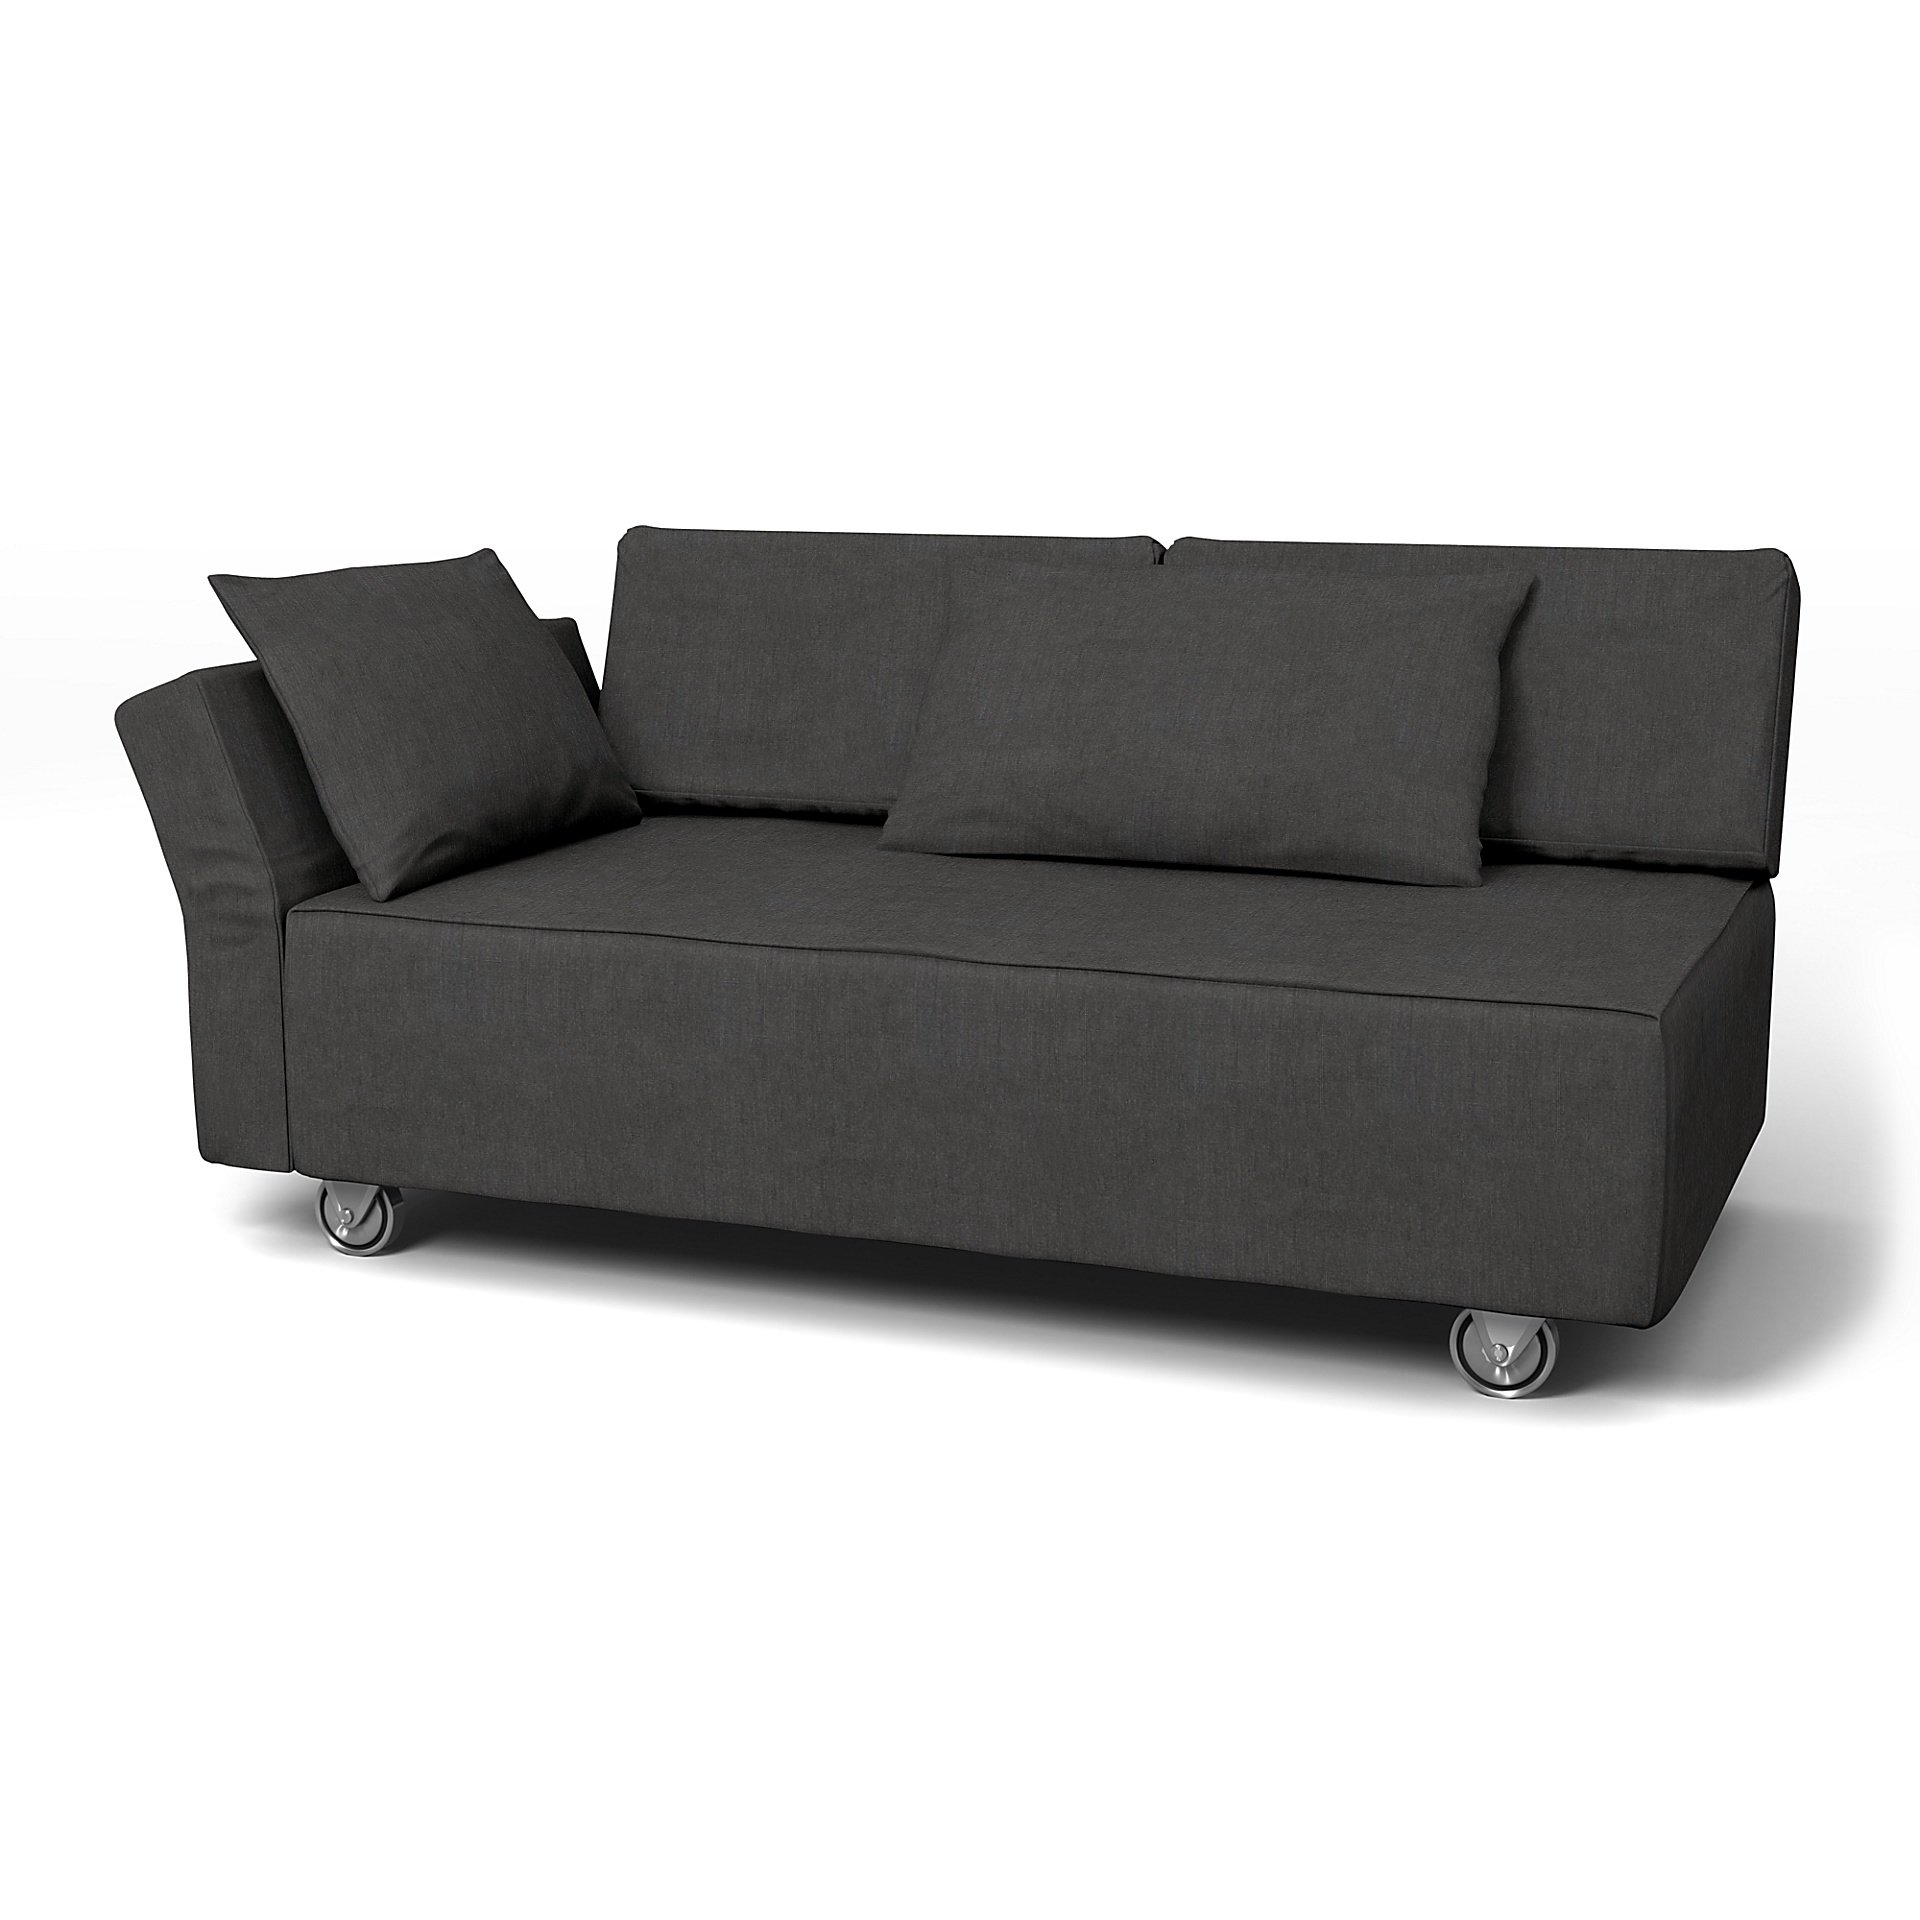 IKEA - Falsterbo 2 Seat Sofa with Left Arm Cover, Espresso, Linen - Bemz